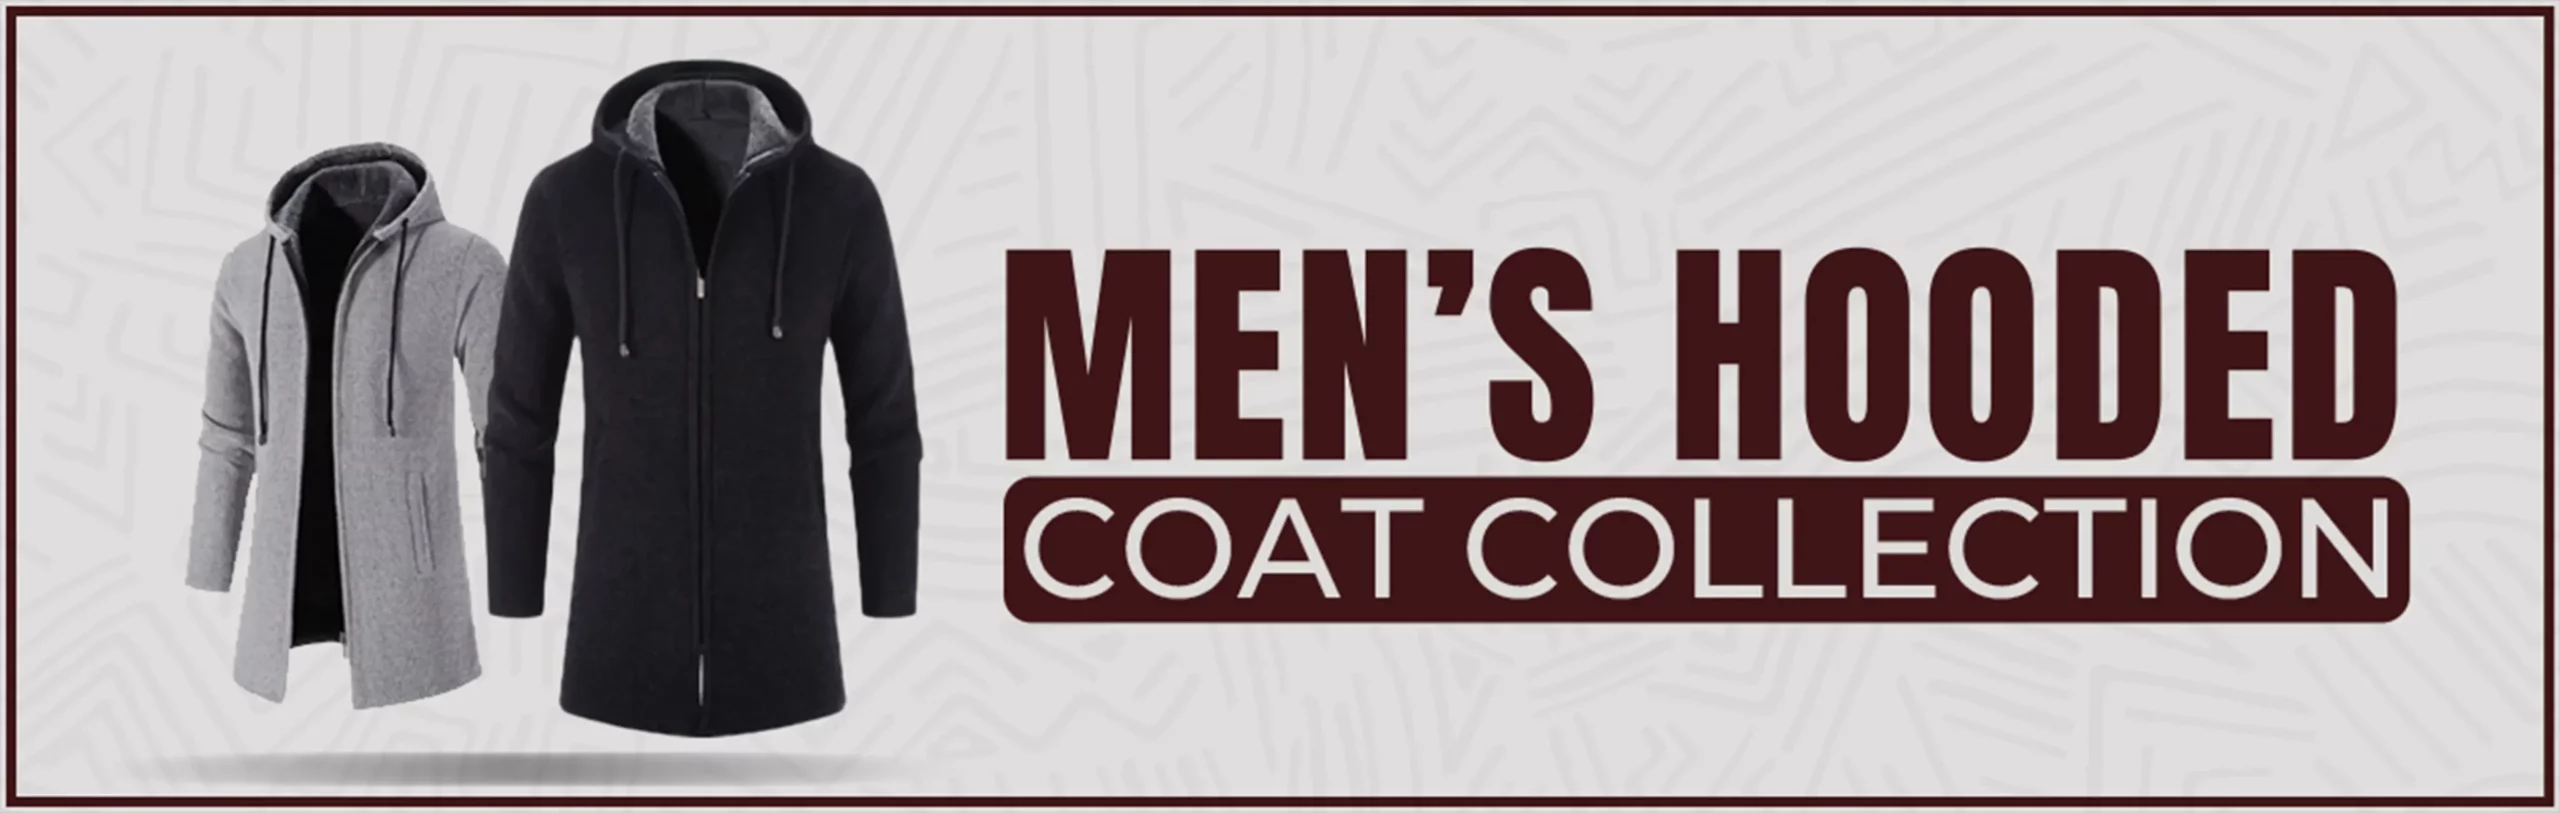 Mens Hooded Coat